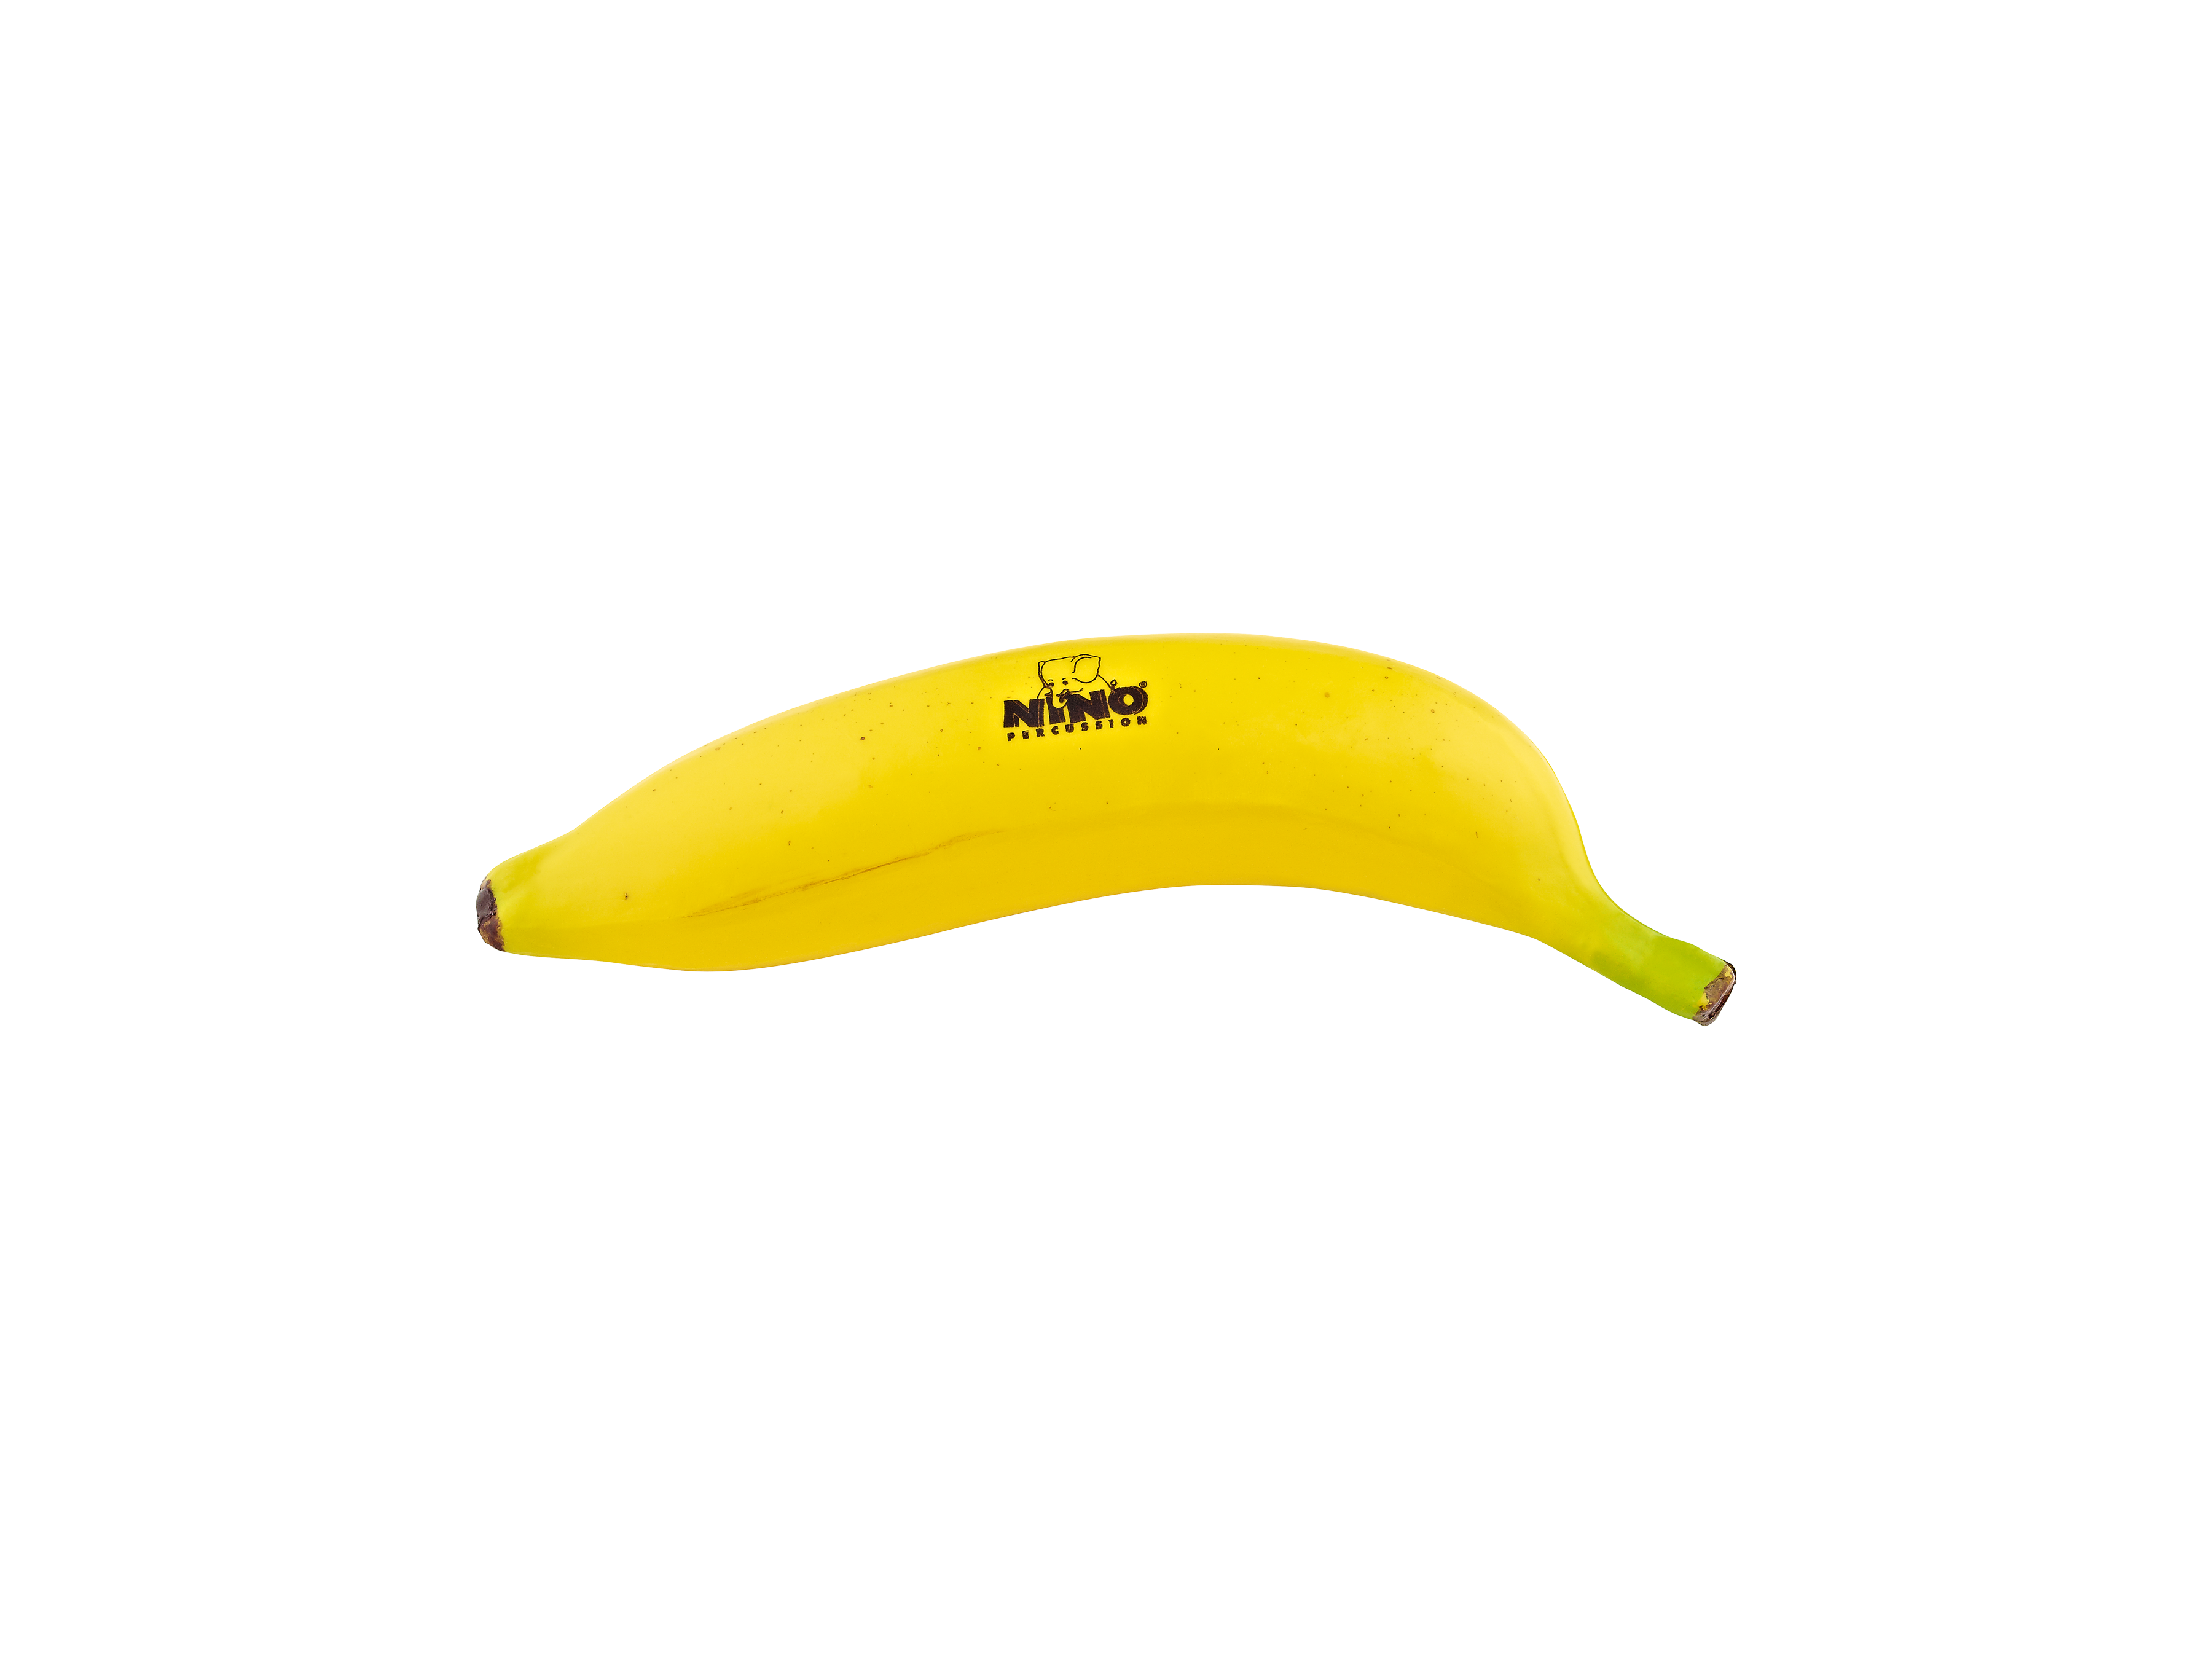 NINO 597 "Banana" Shaker